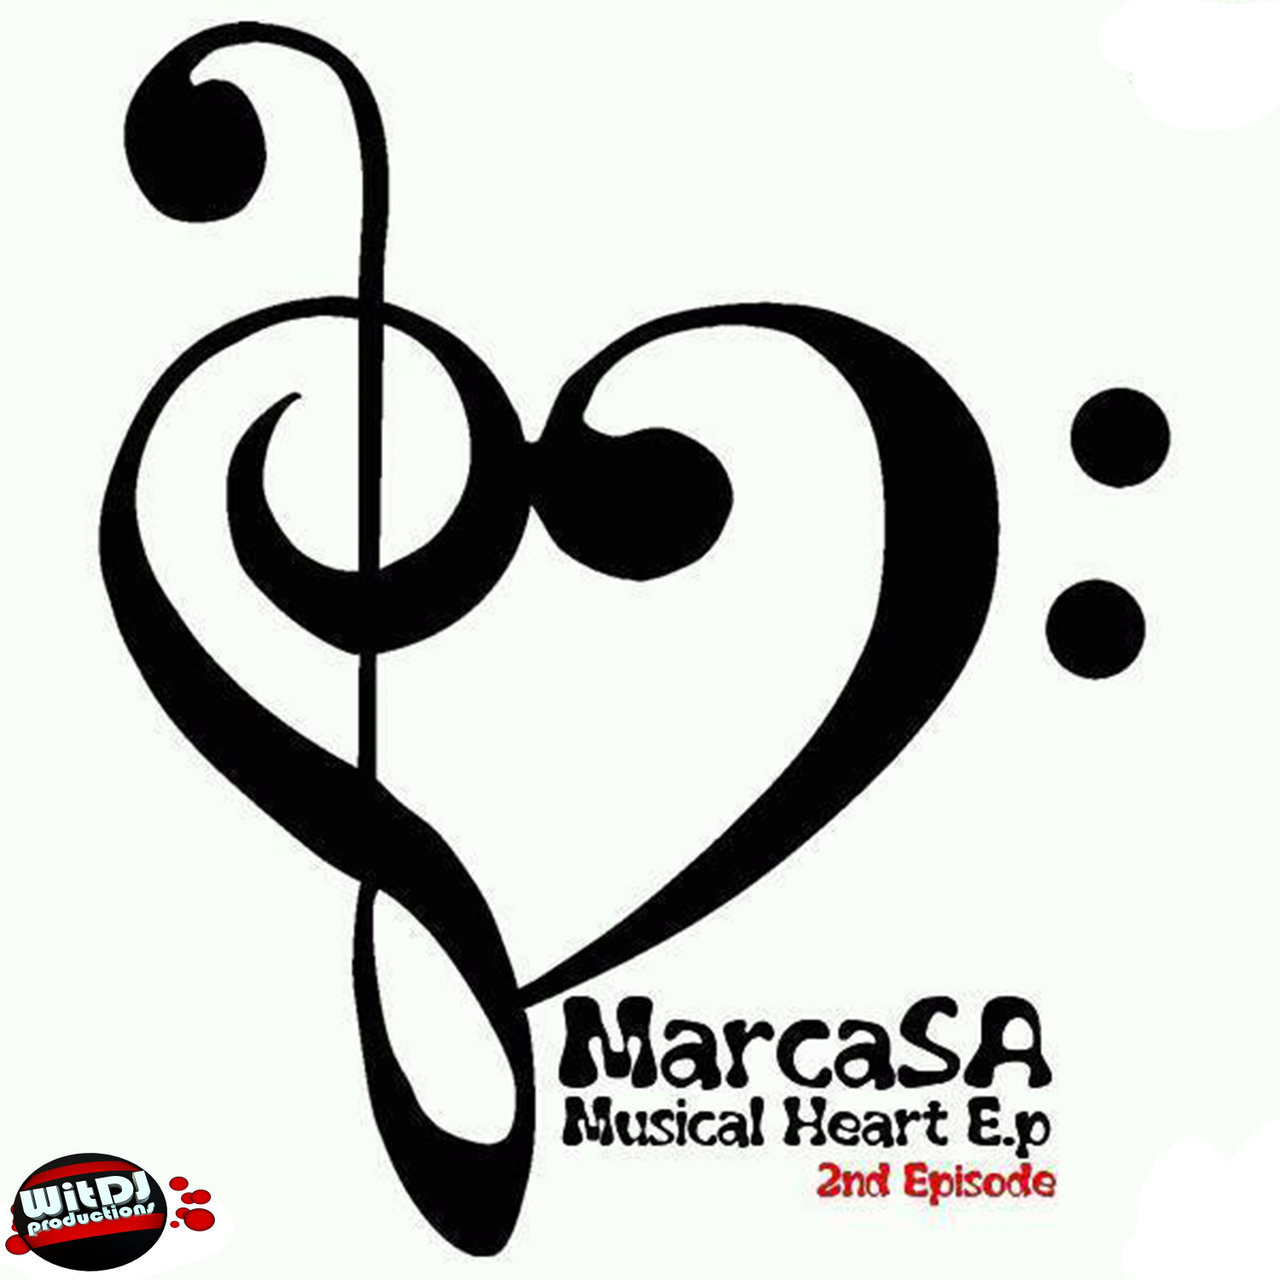 MarcaSA - Musical Heart EP / WitDJ Productions PTY LTD